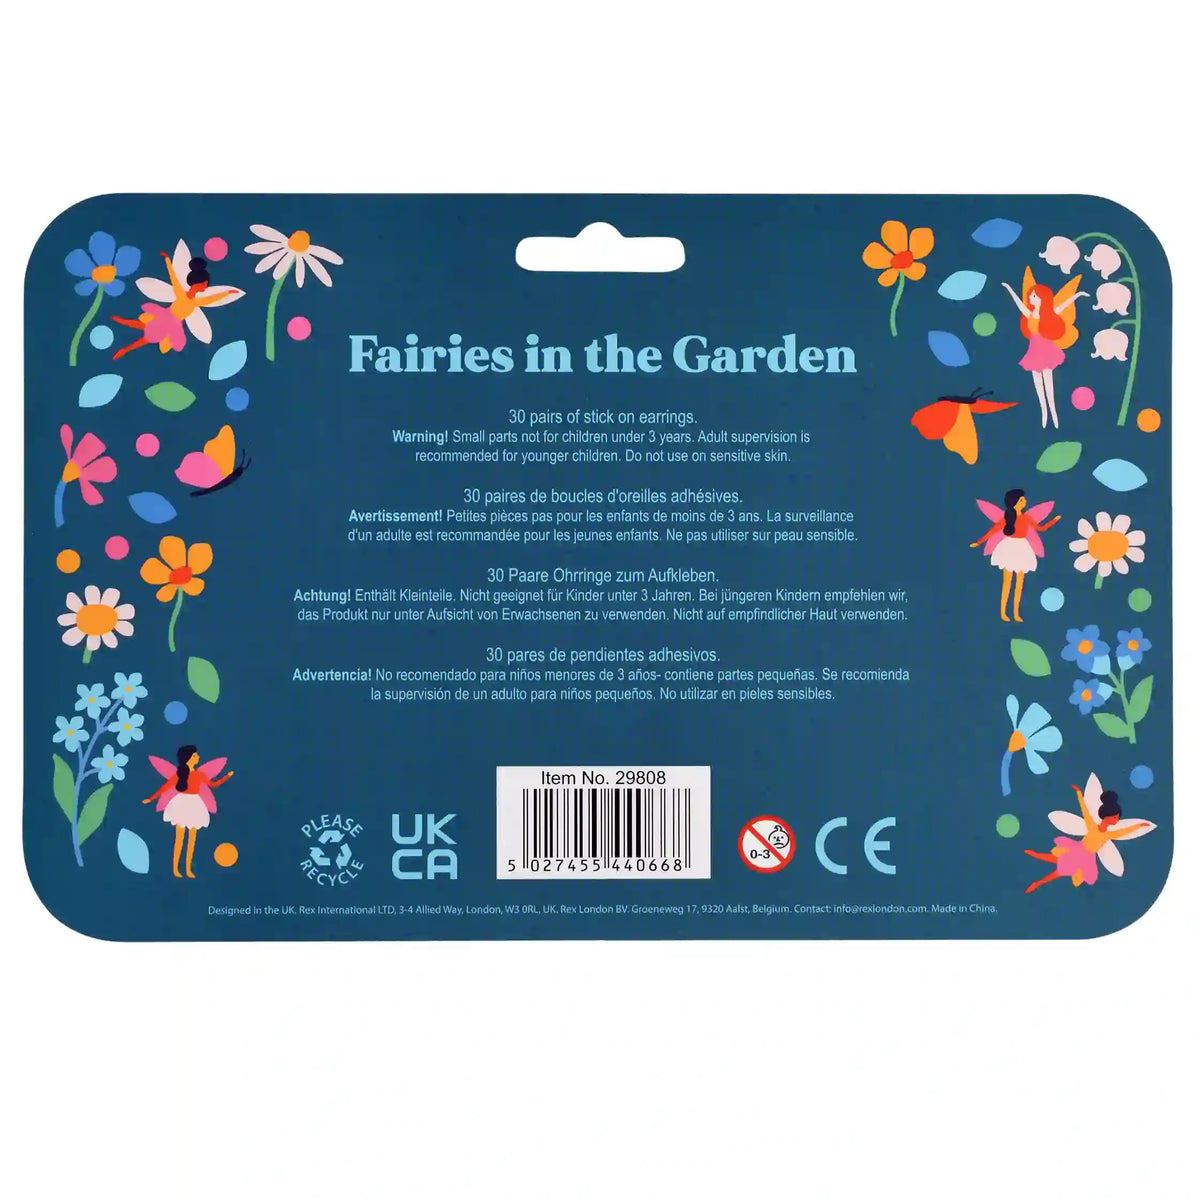 Fairies in the Garden - Stick on Earrings